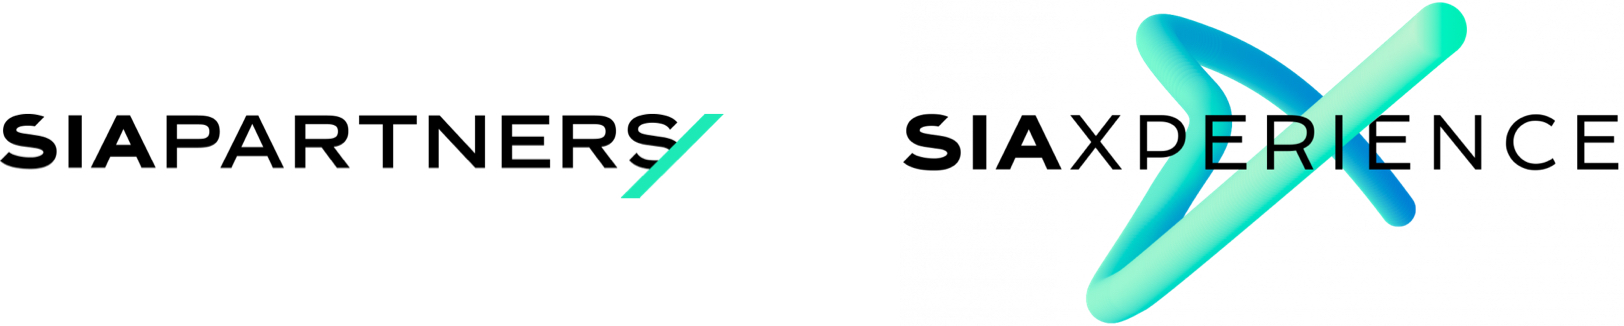 Sia Partners SiaXperience logo